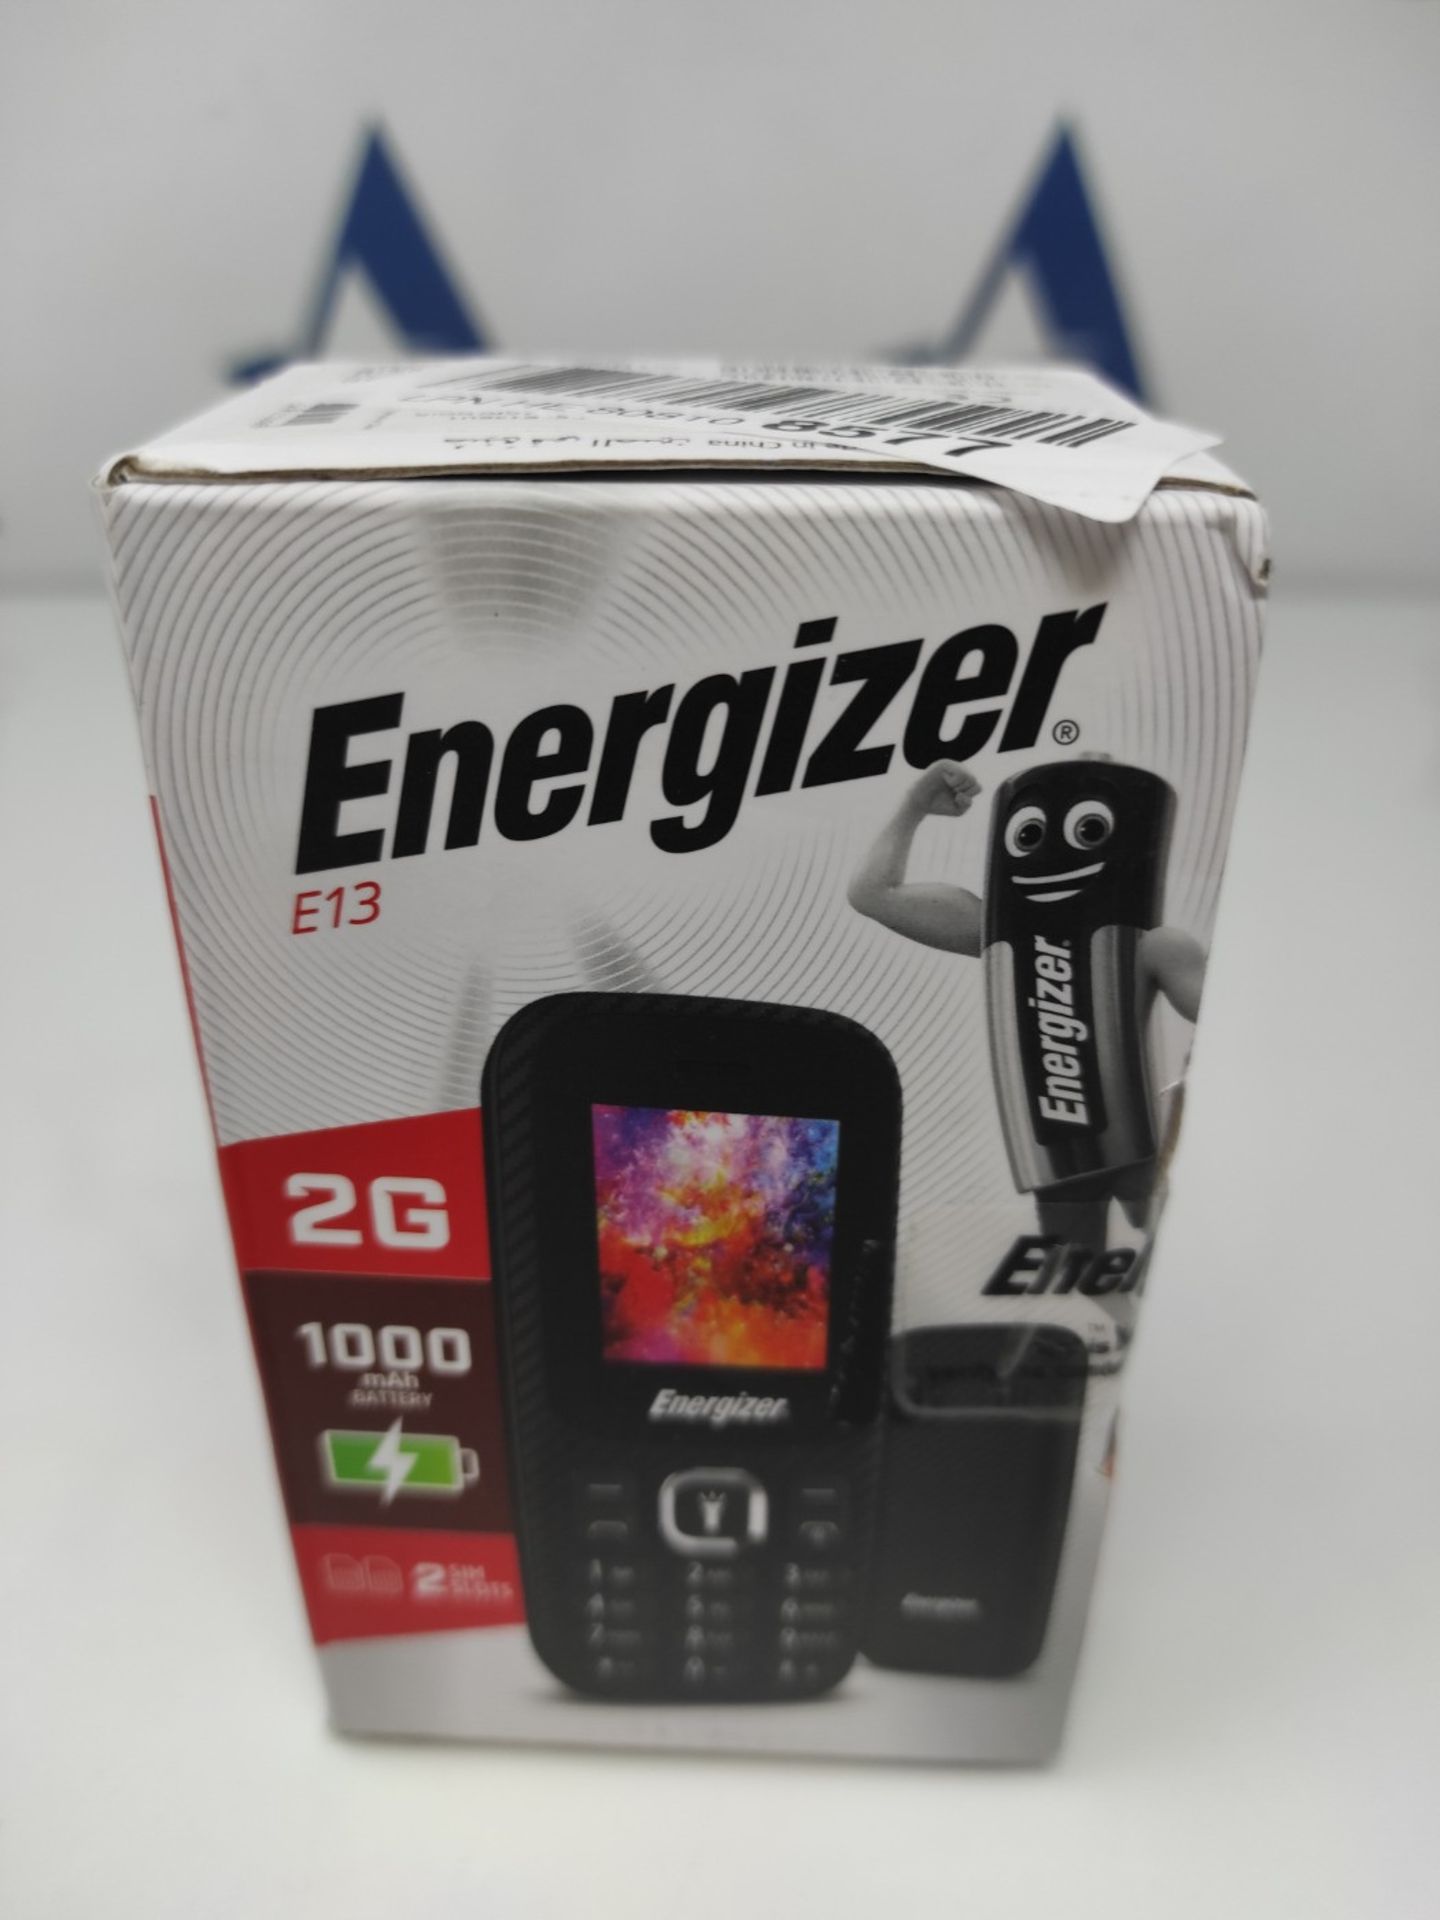 Energizer - Mobile E13-2G - Dual Sim Mobile Phone - Black - Mini SIM - Unlocked - Torc - Image 5 of 6